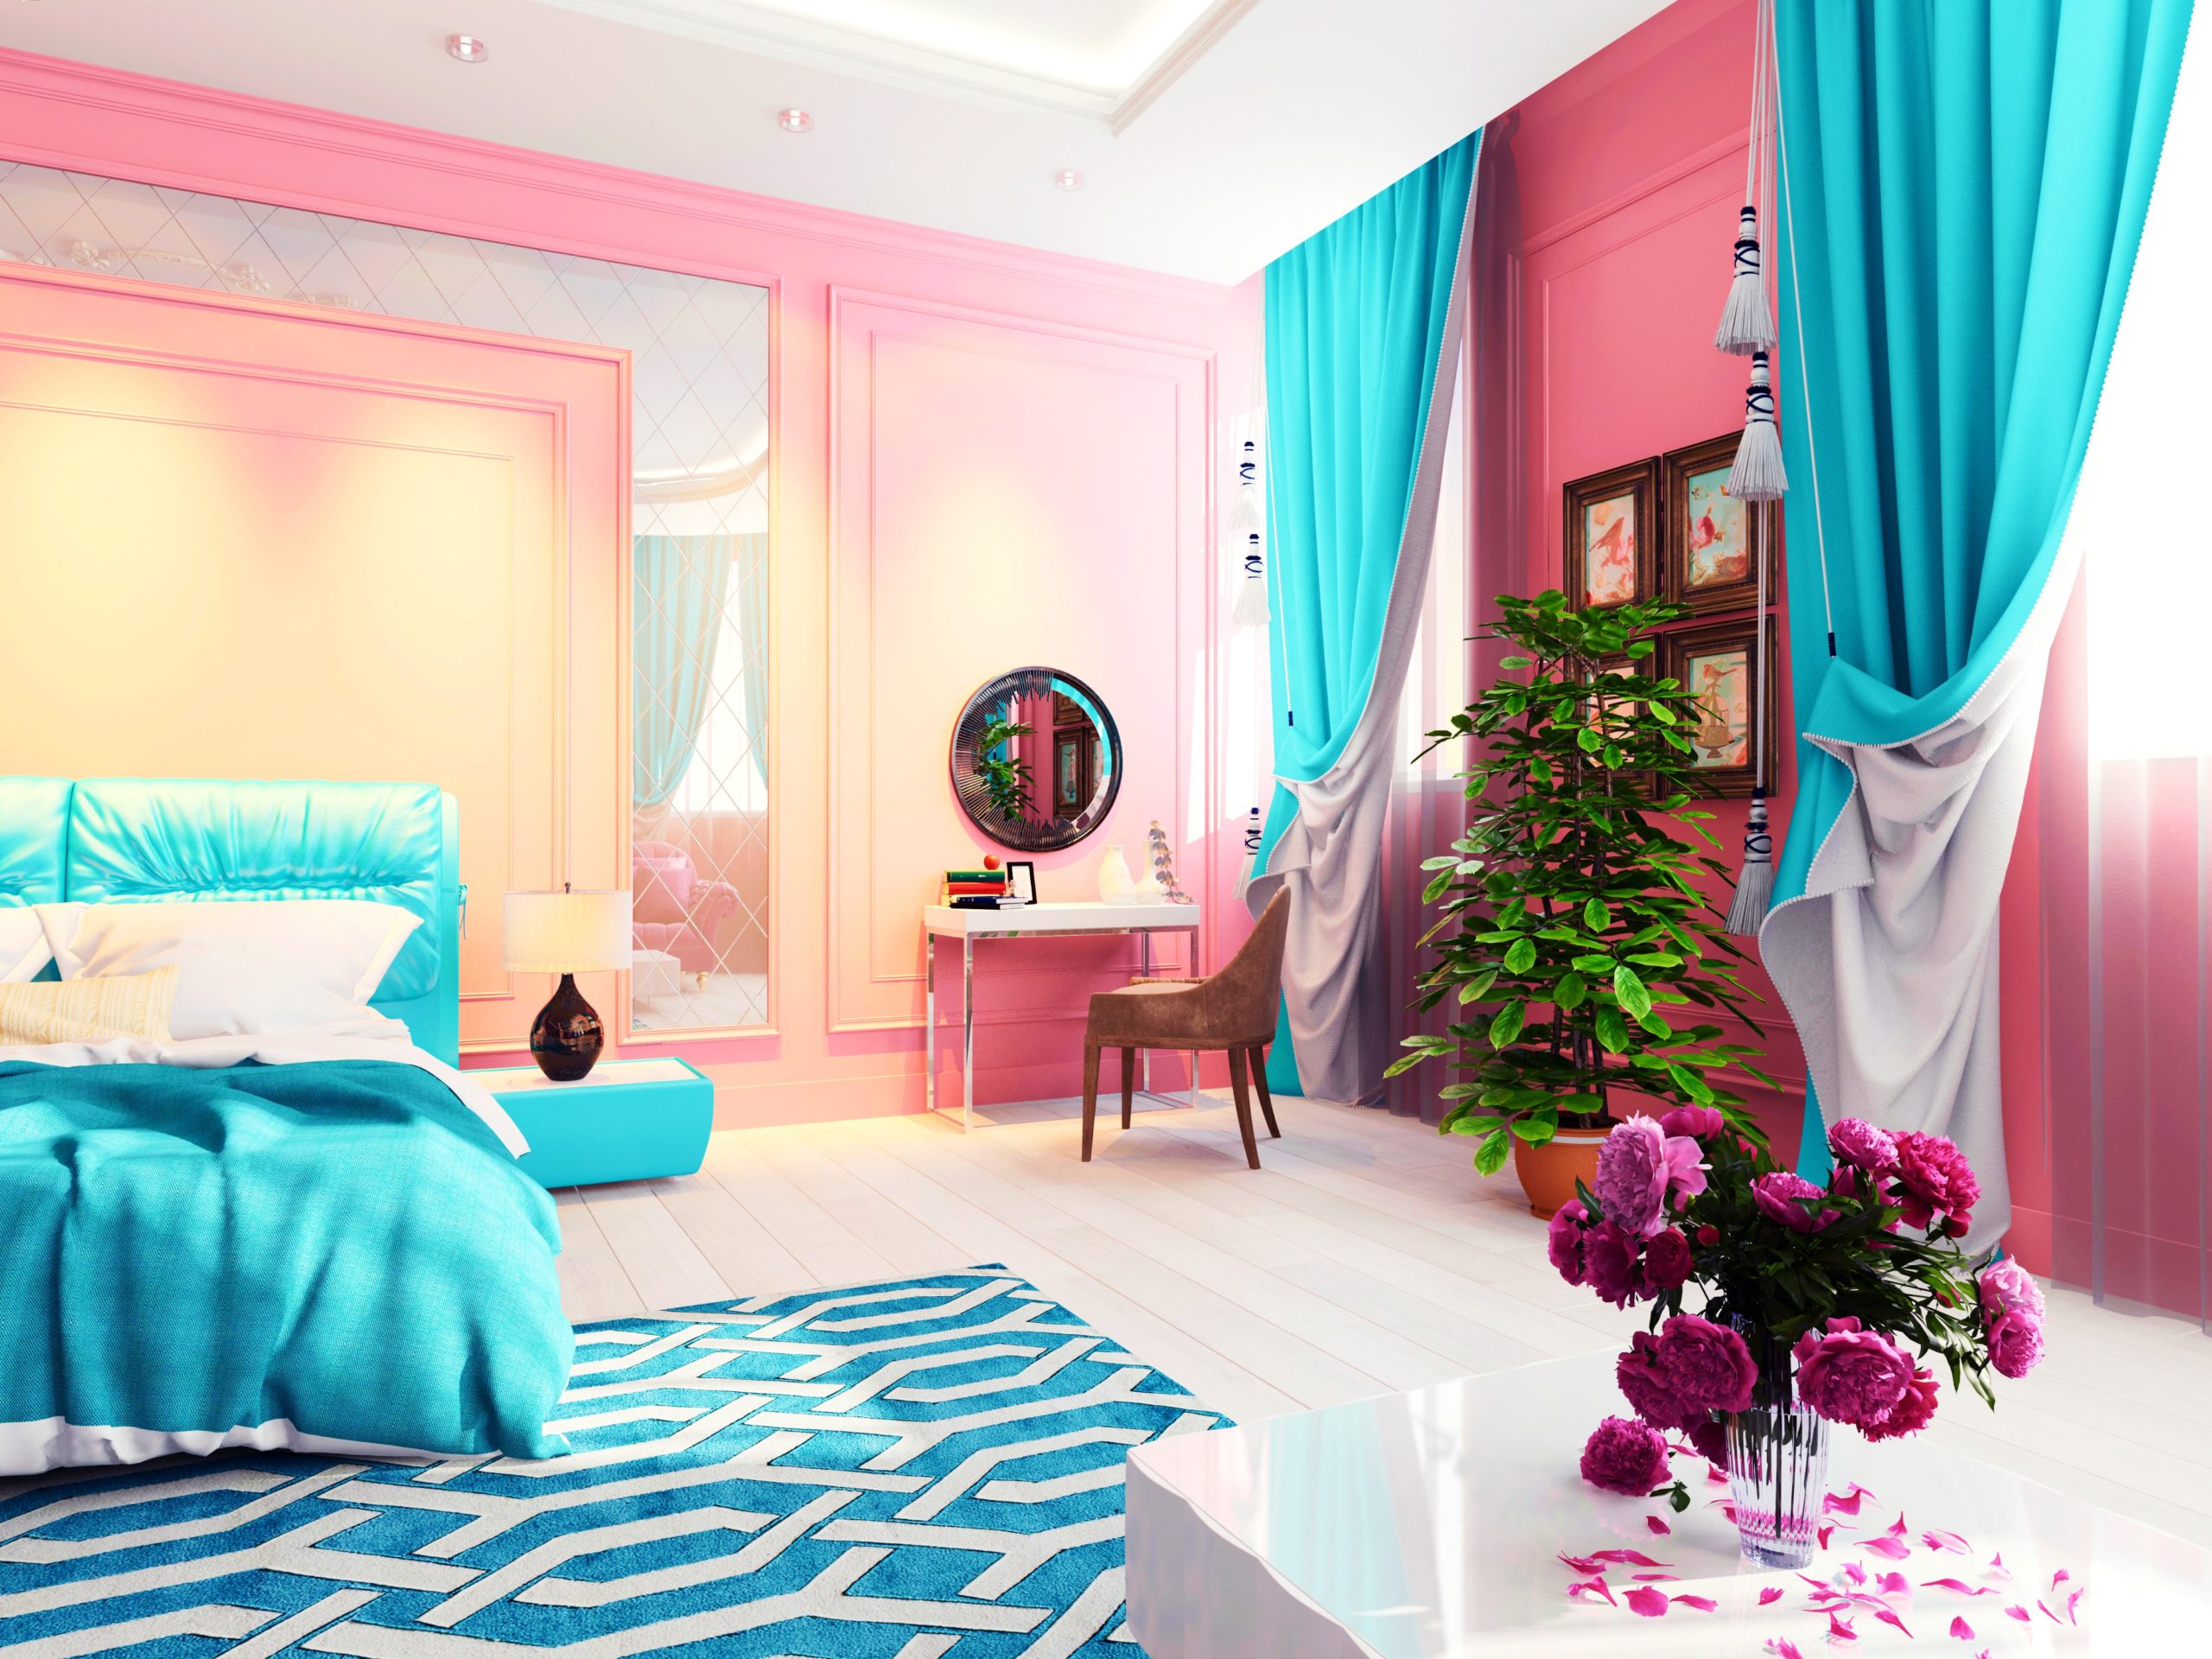 <img src="pink.jpg" alt="pink and teal royal bedroom theme"/> 